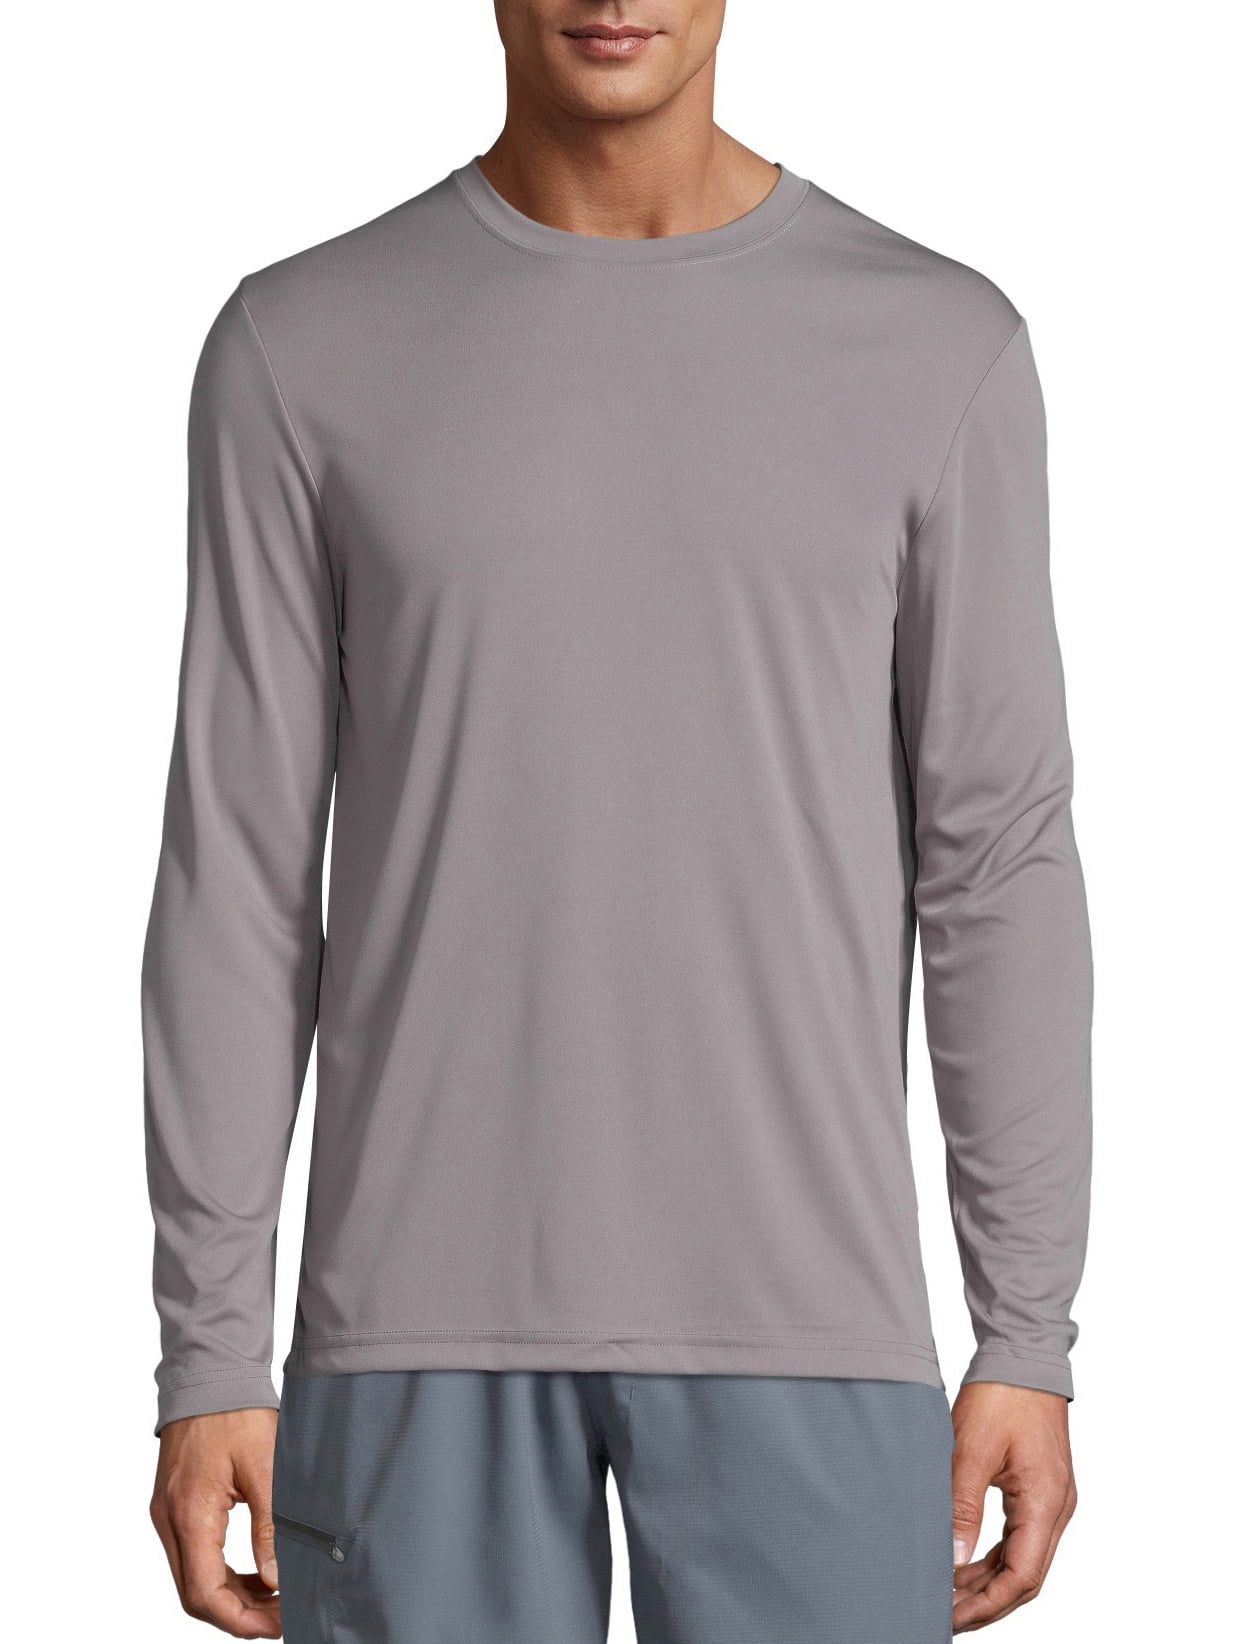 Hanes Cool DRI Performance Long-Sleeve T-Shirt (482L) Graphite, M ...